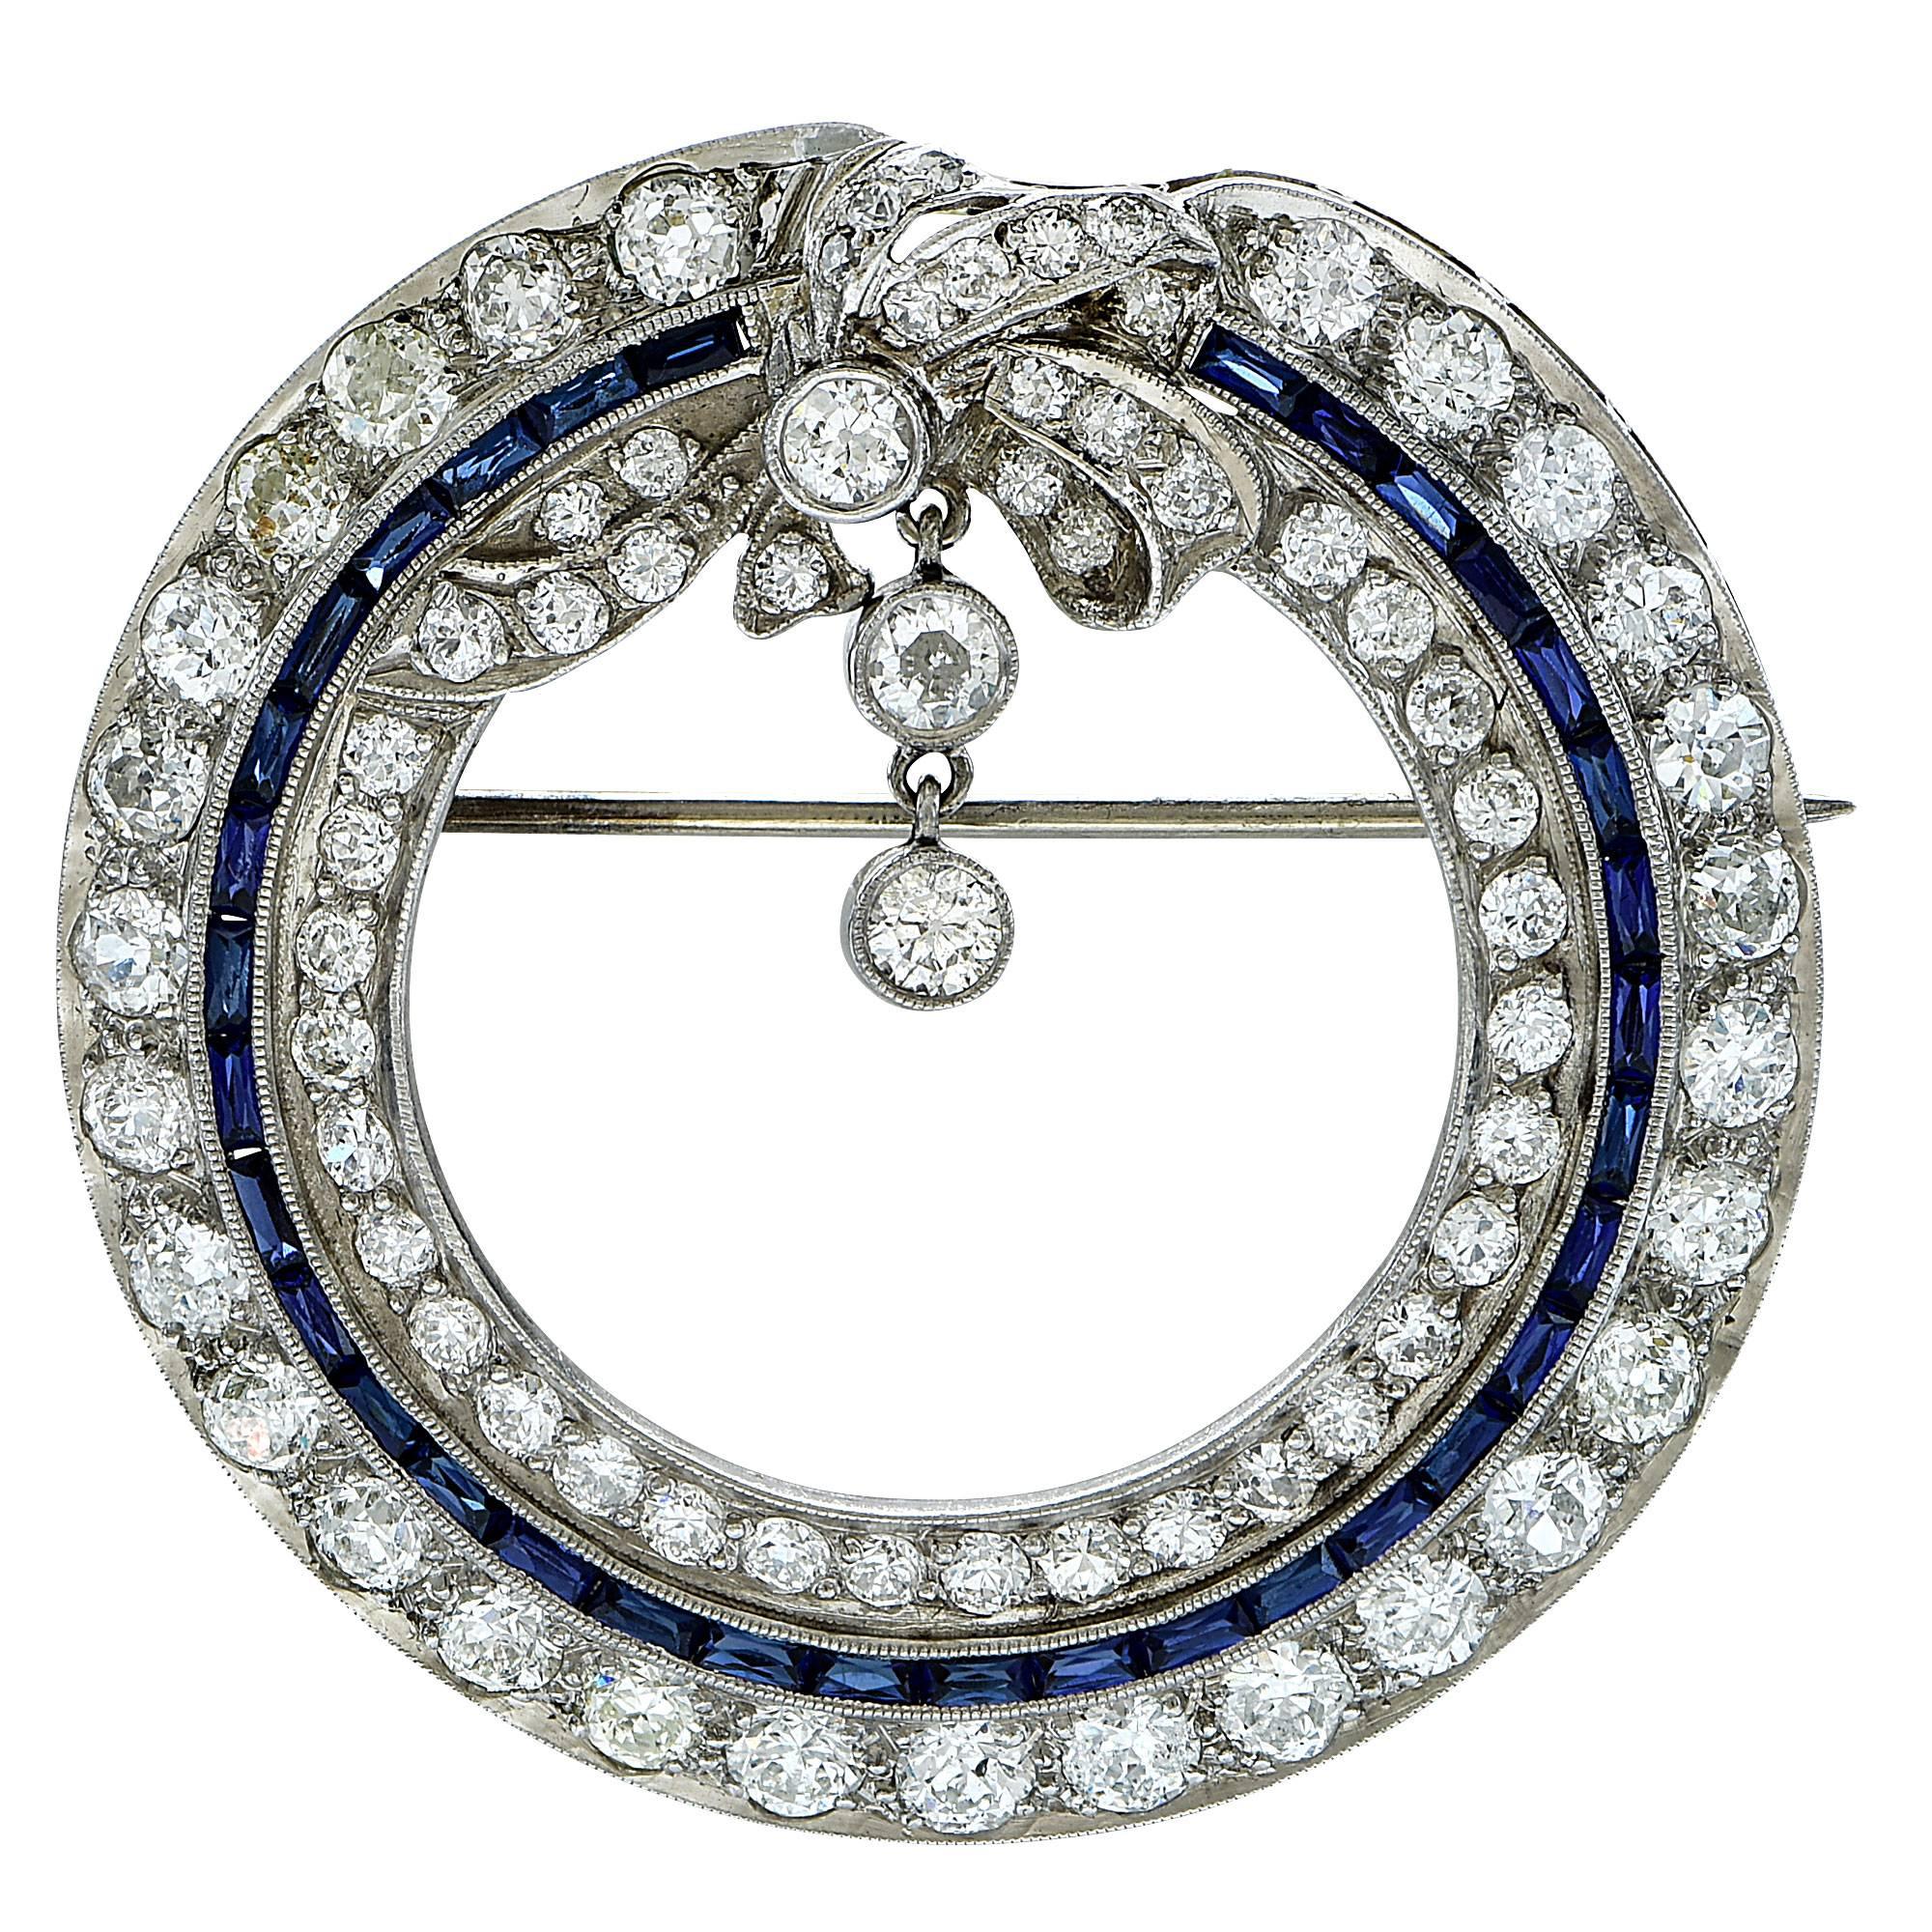 Exceptional 4.25 Carat Art Deco Diamond Brooch